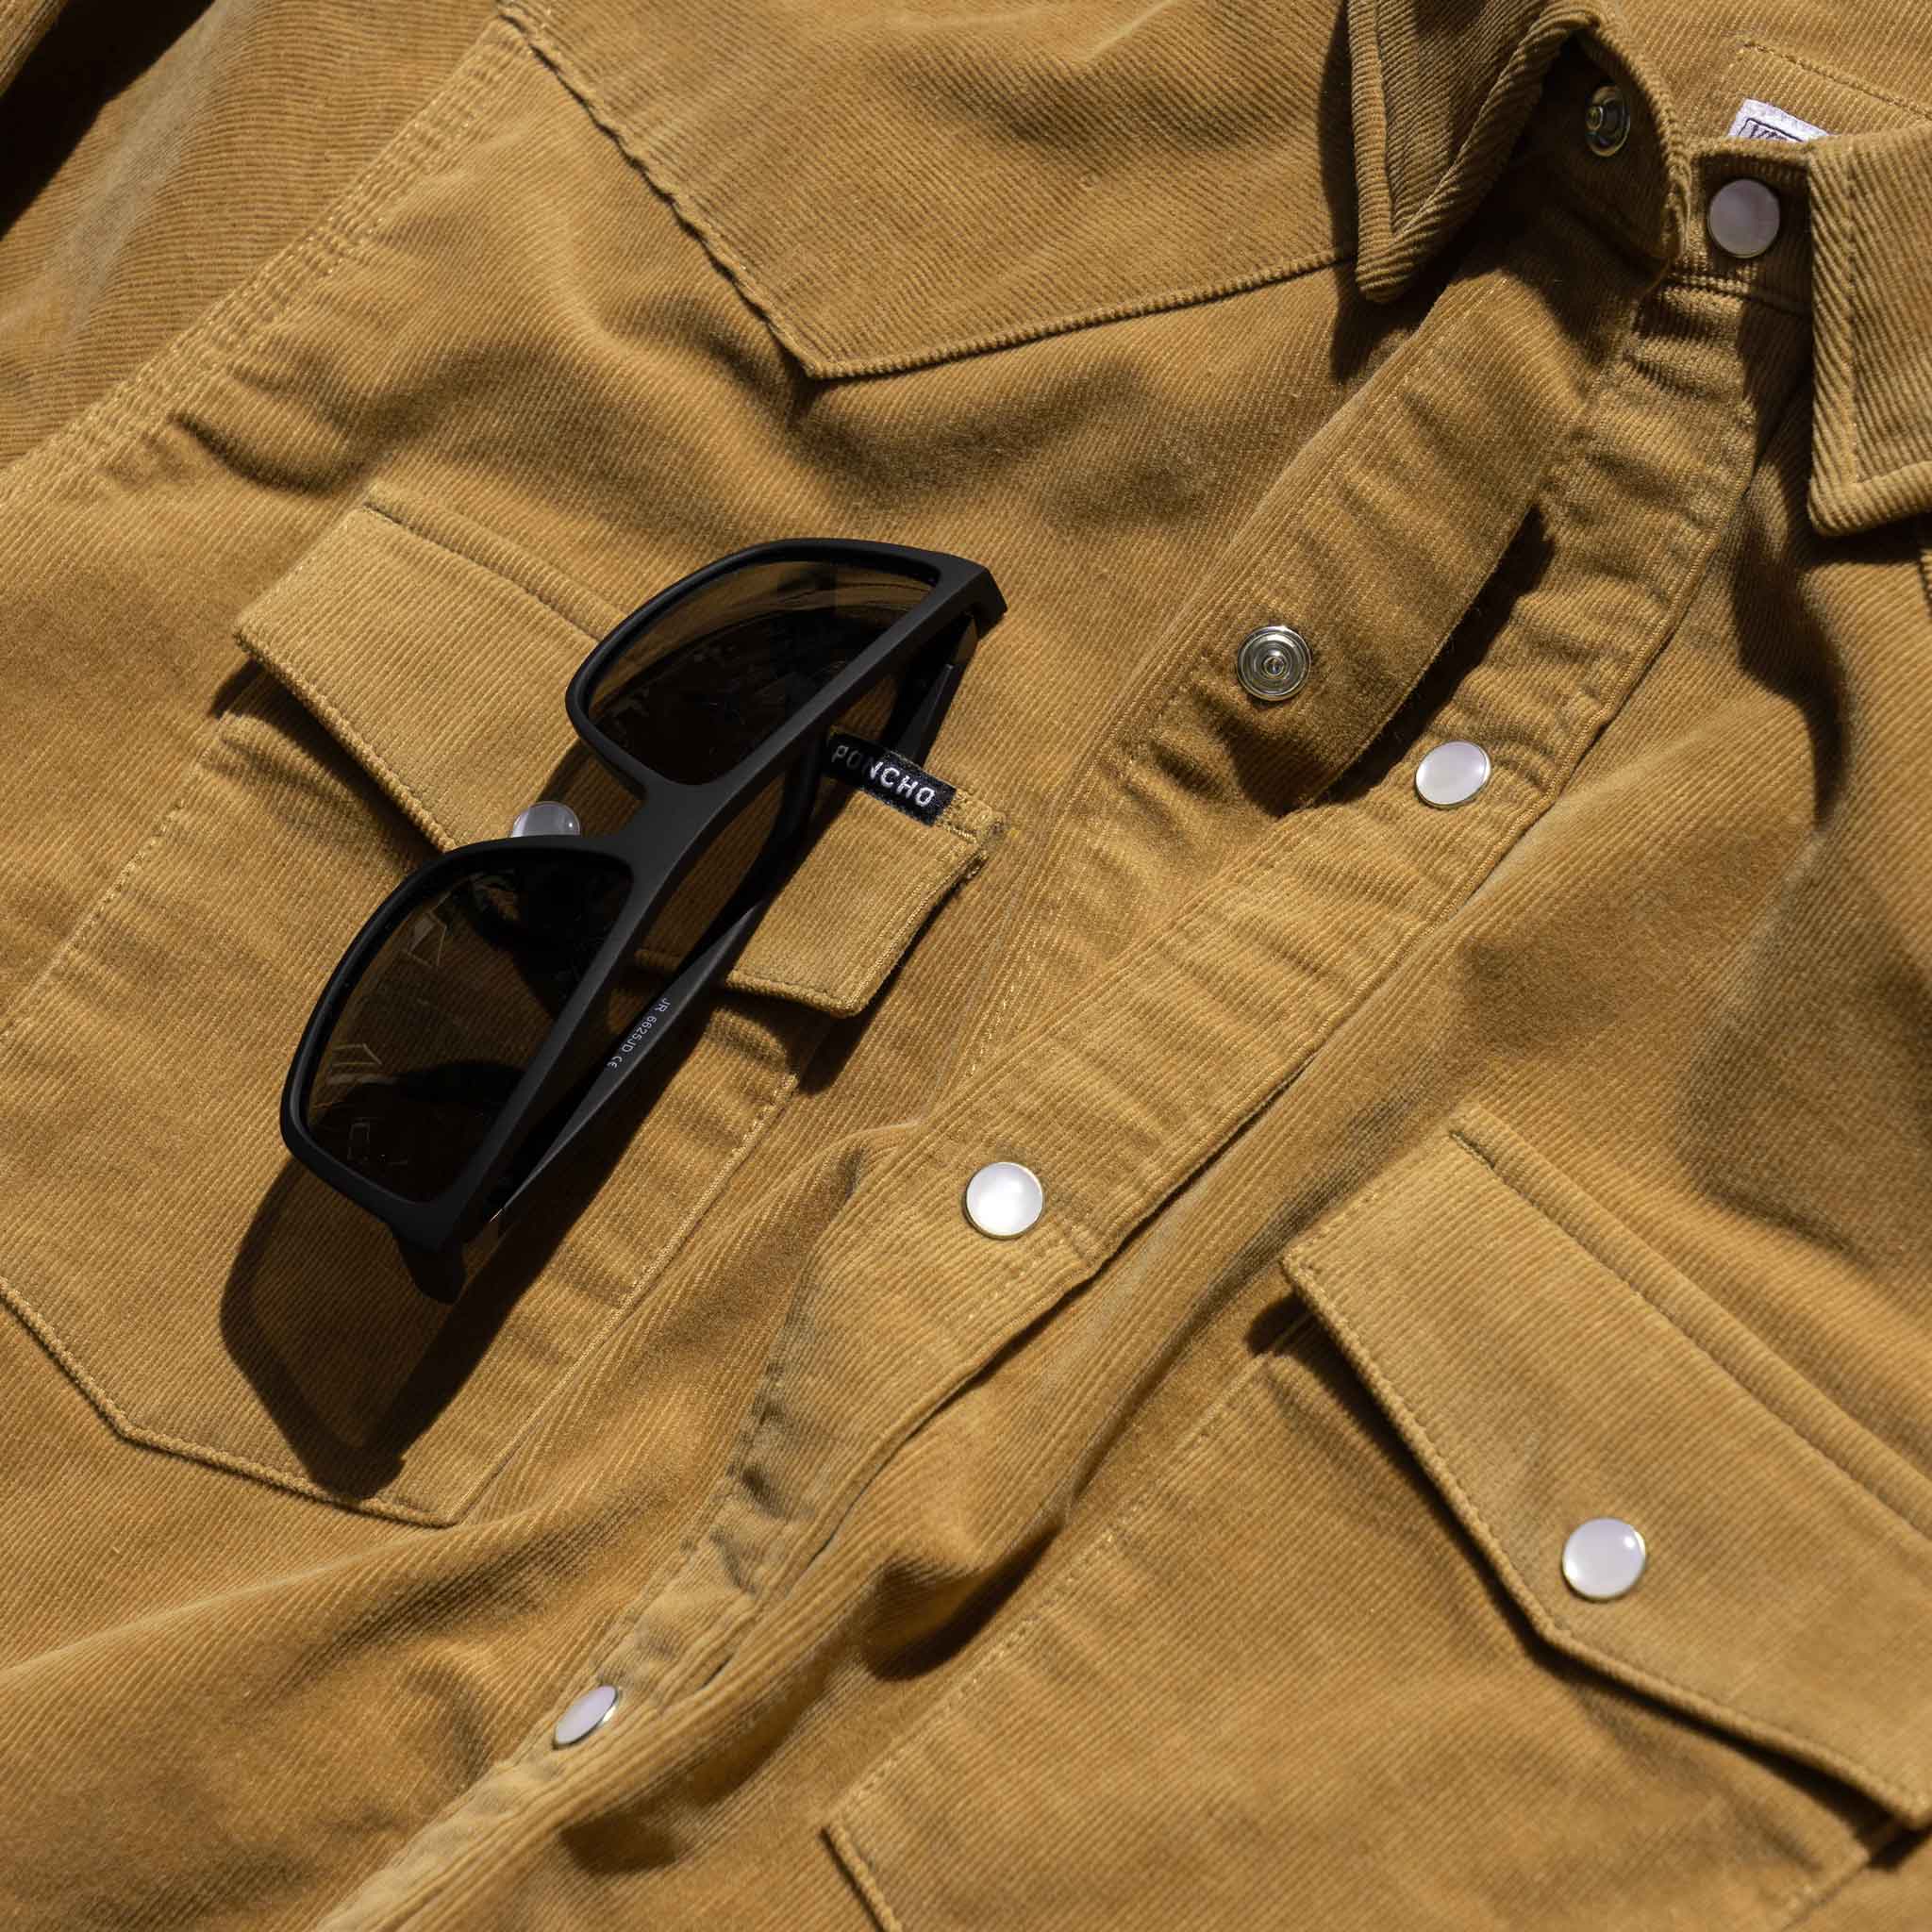 sunglasses slit on chest pocket on shirt